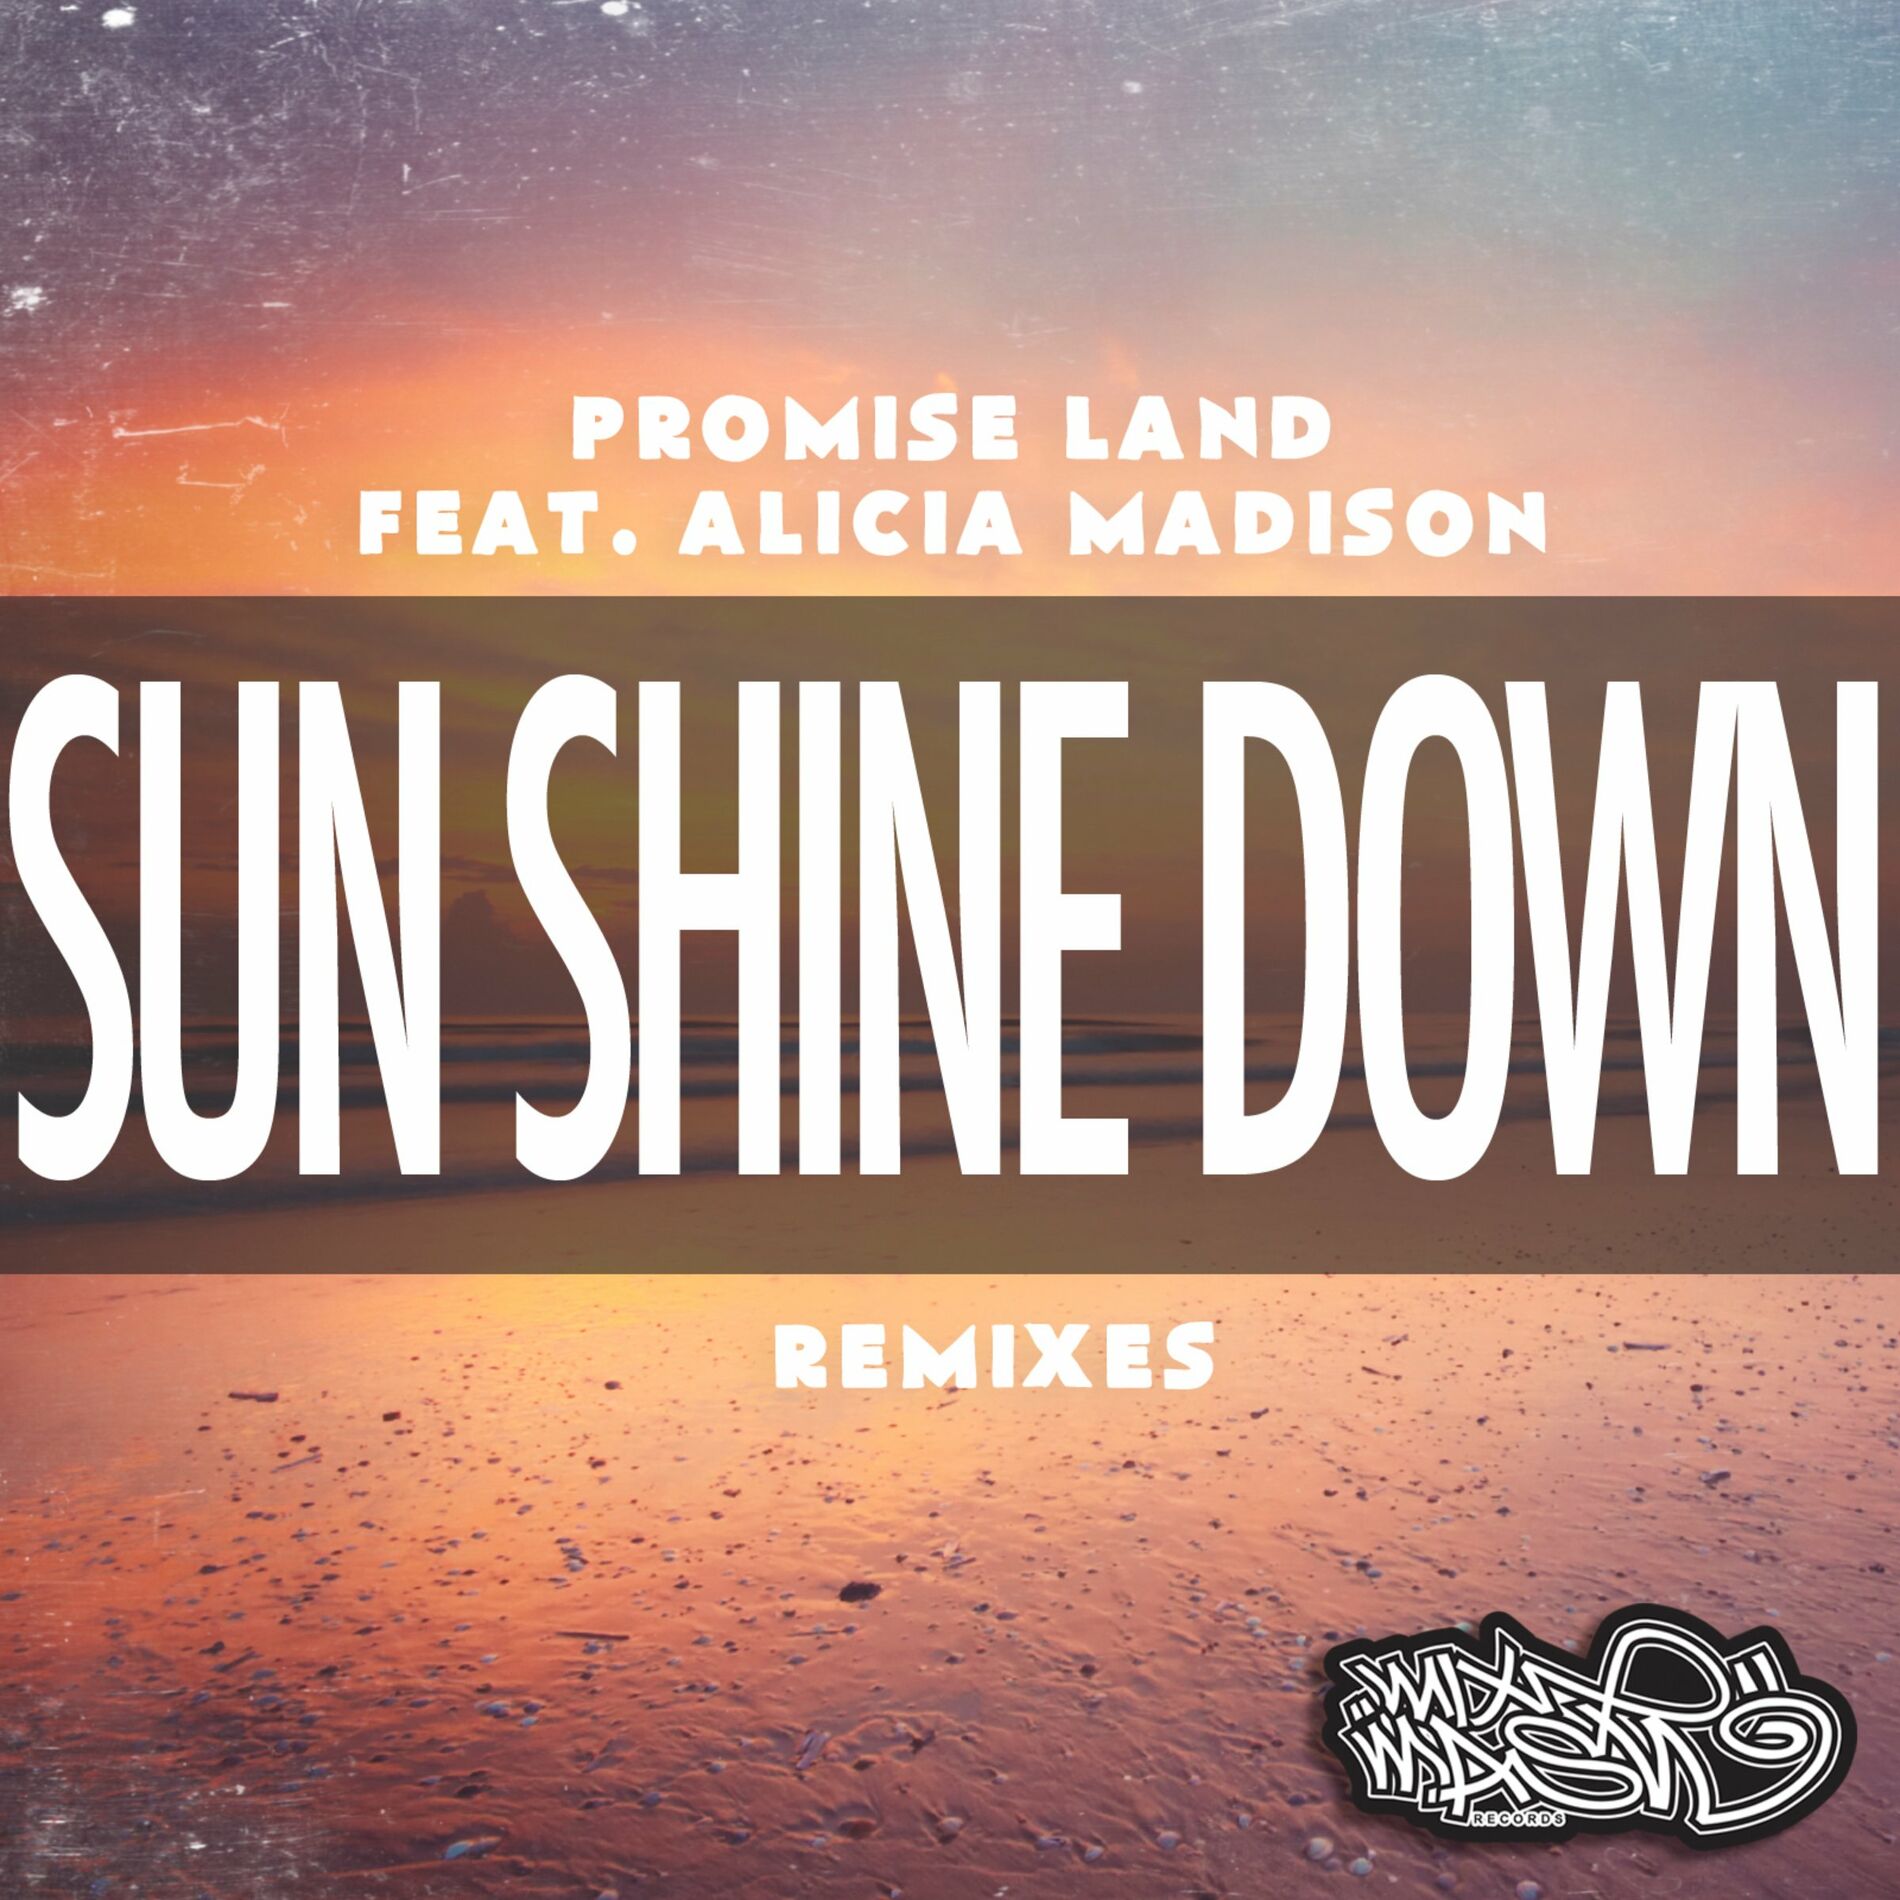 Promise Land: albums, songs, playlists | Listen on Deezer